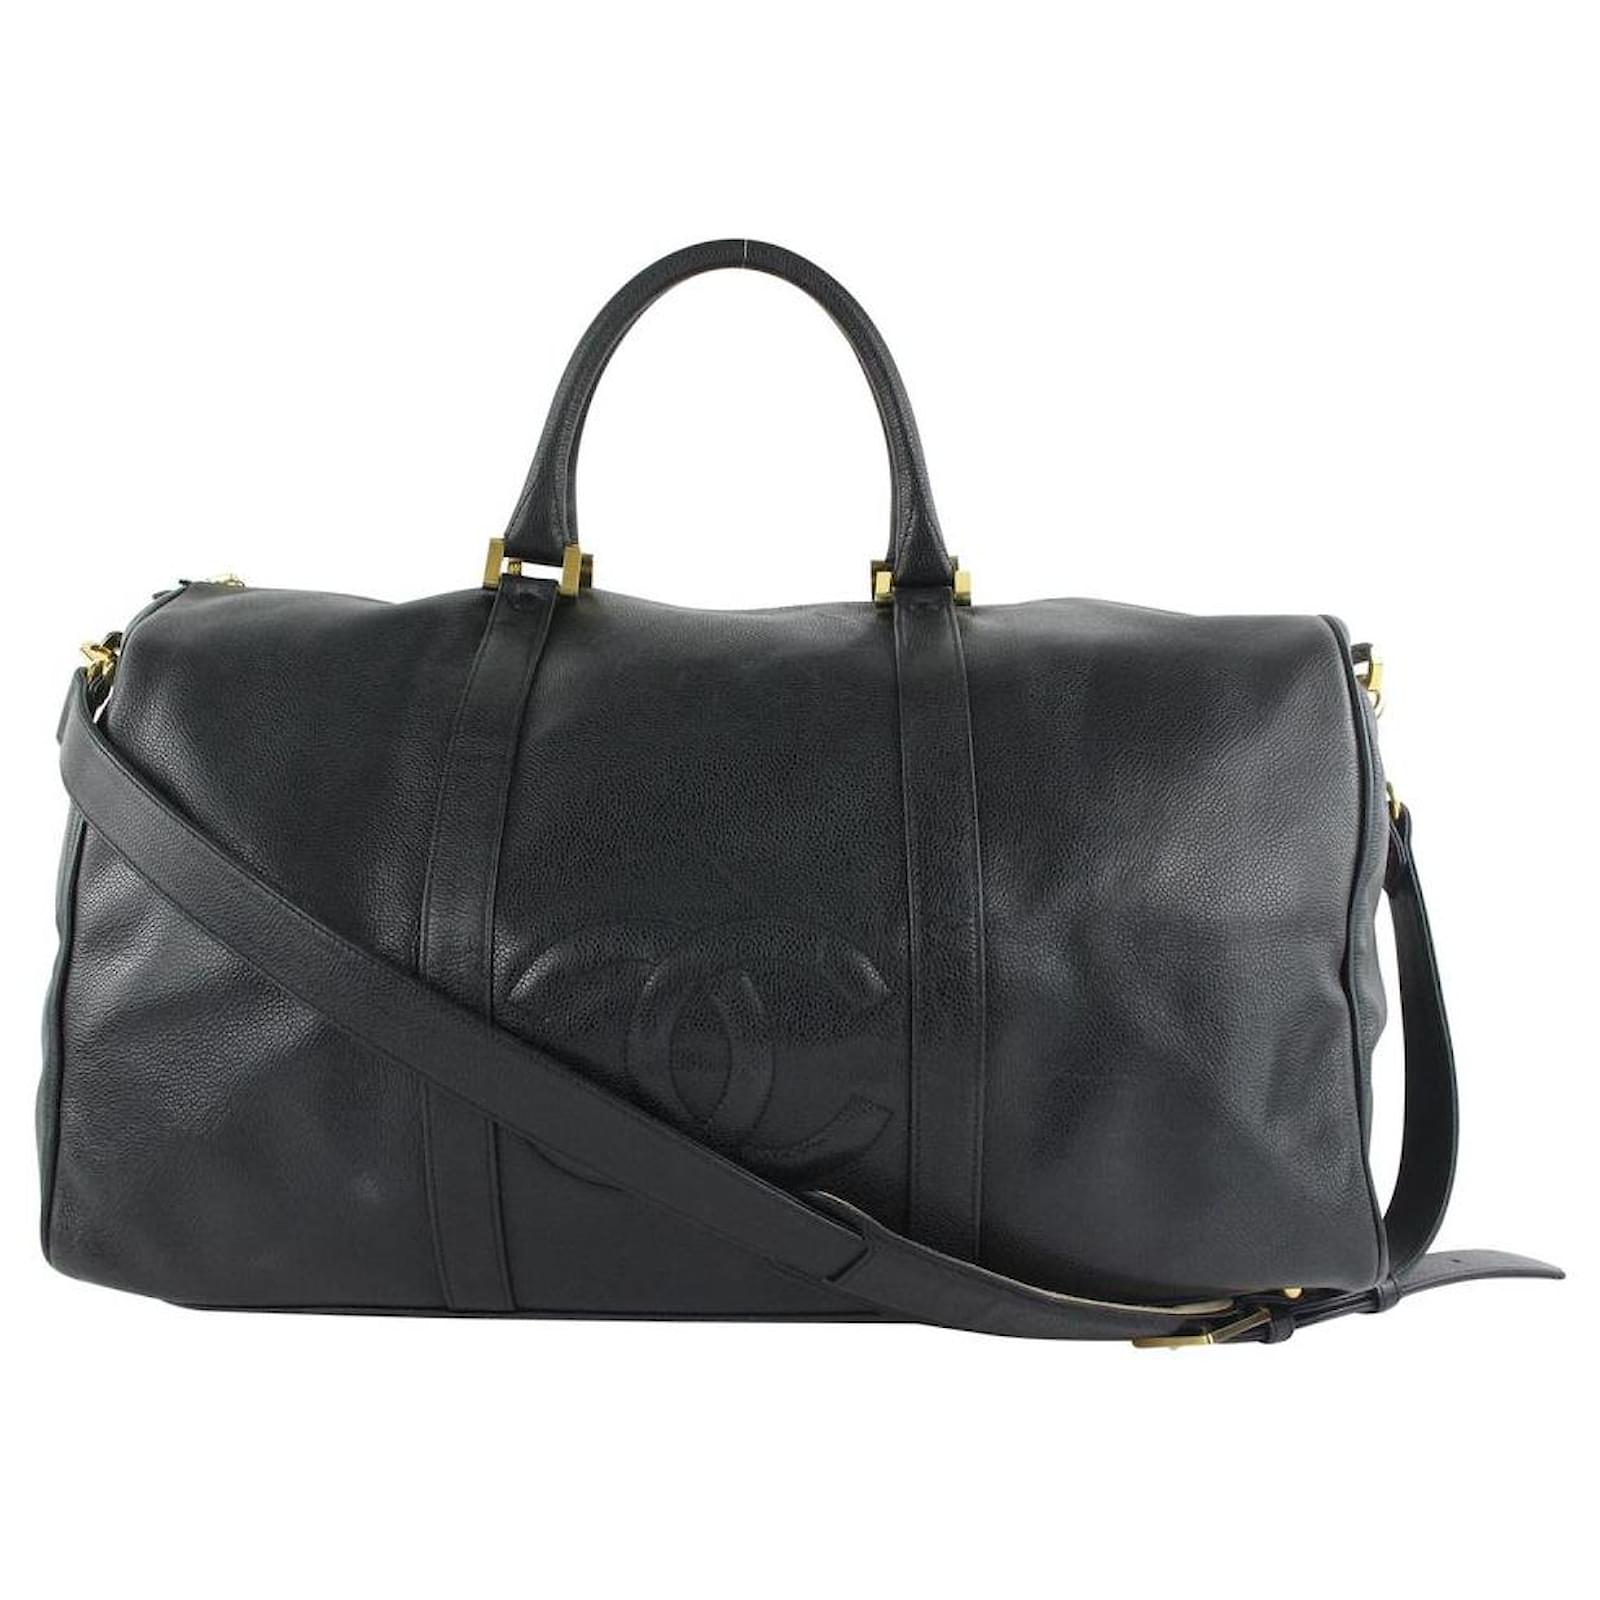 Chanel Timeless Black Caviar Leather CC Boston Duffle Bag with Strap 6cc62